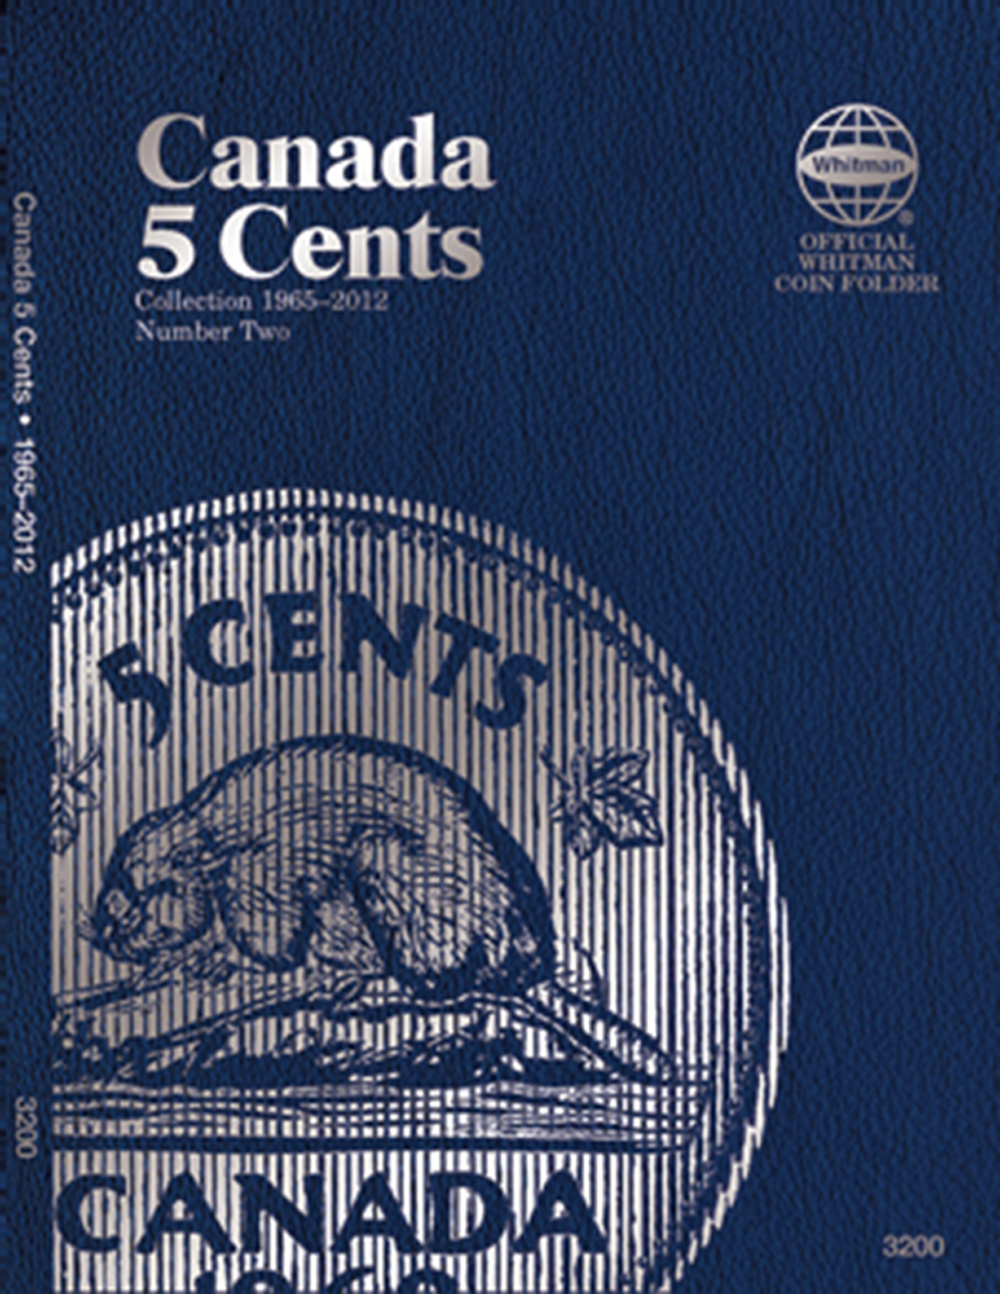 Whitman Canadian 5 Cent Coin Folder 1965 - 2012